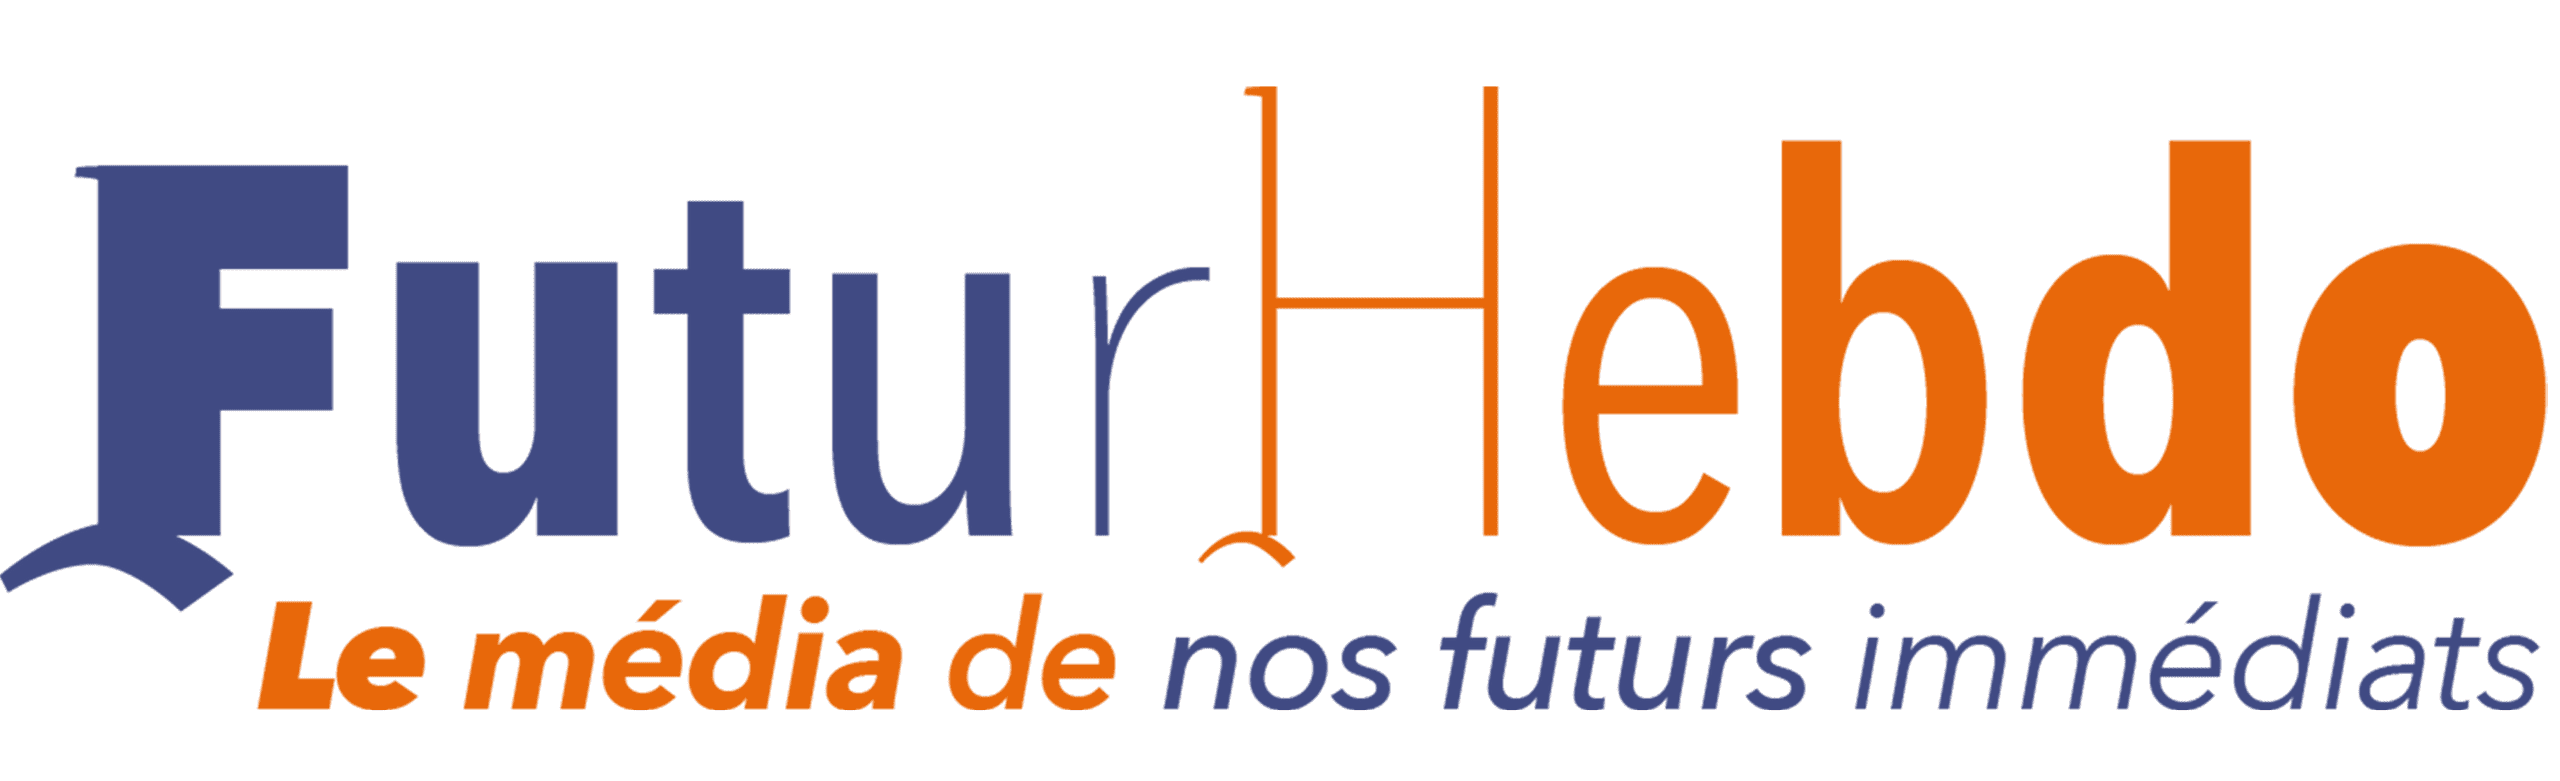 FuturHebdo - Logo couleur